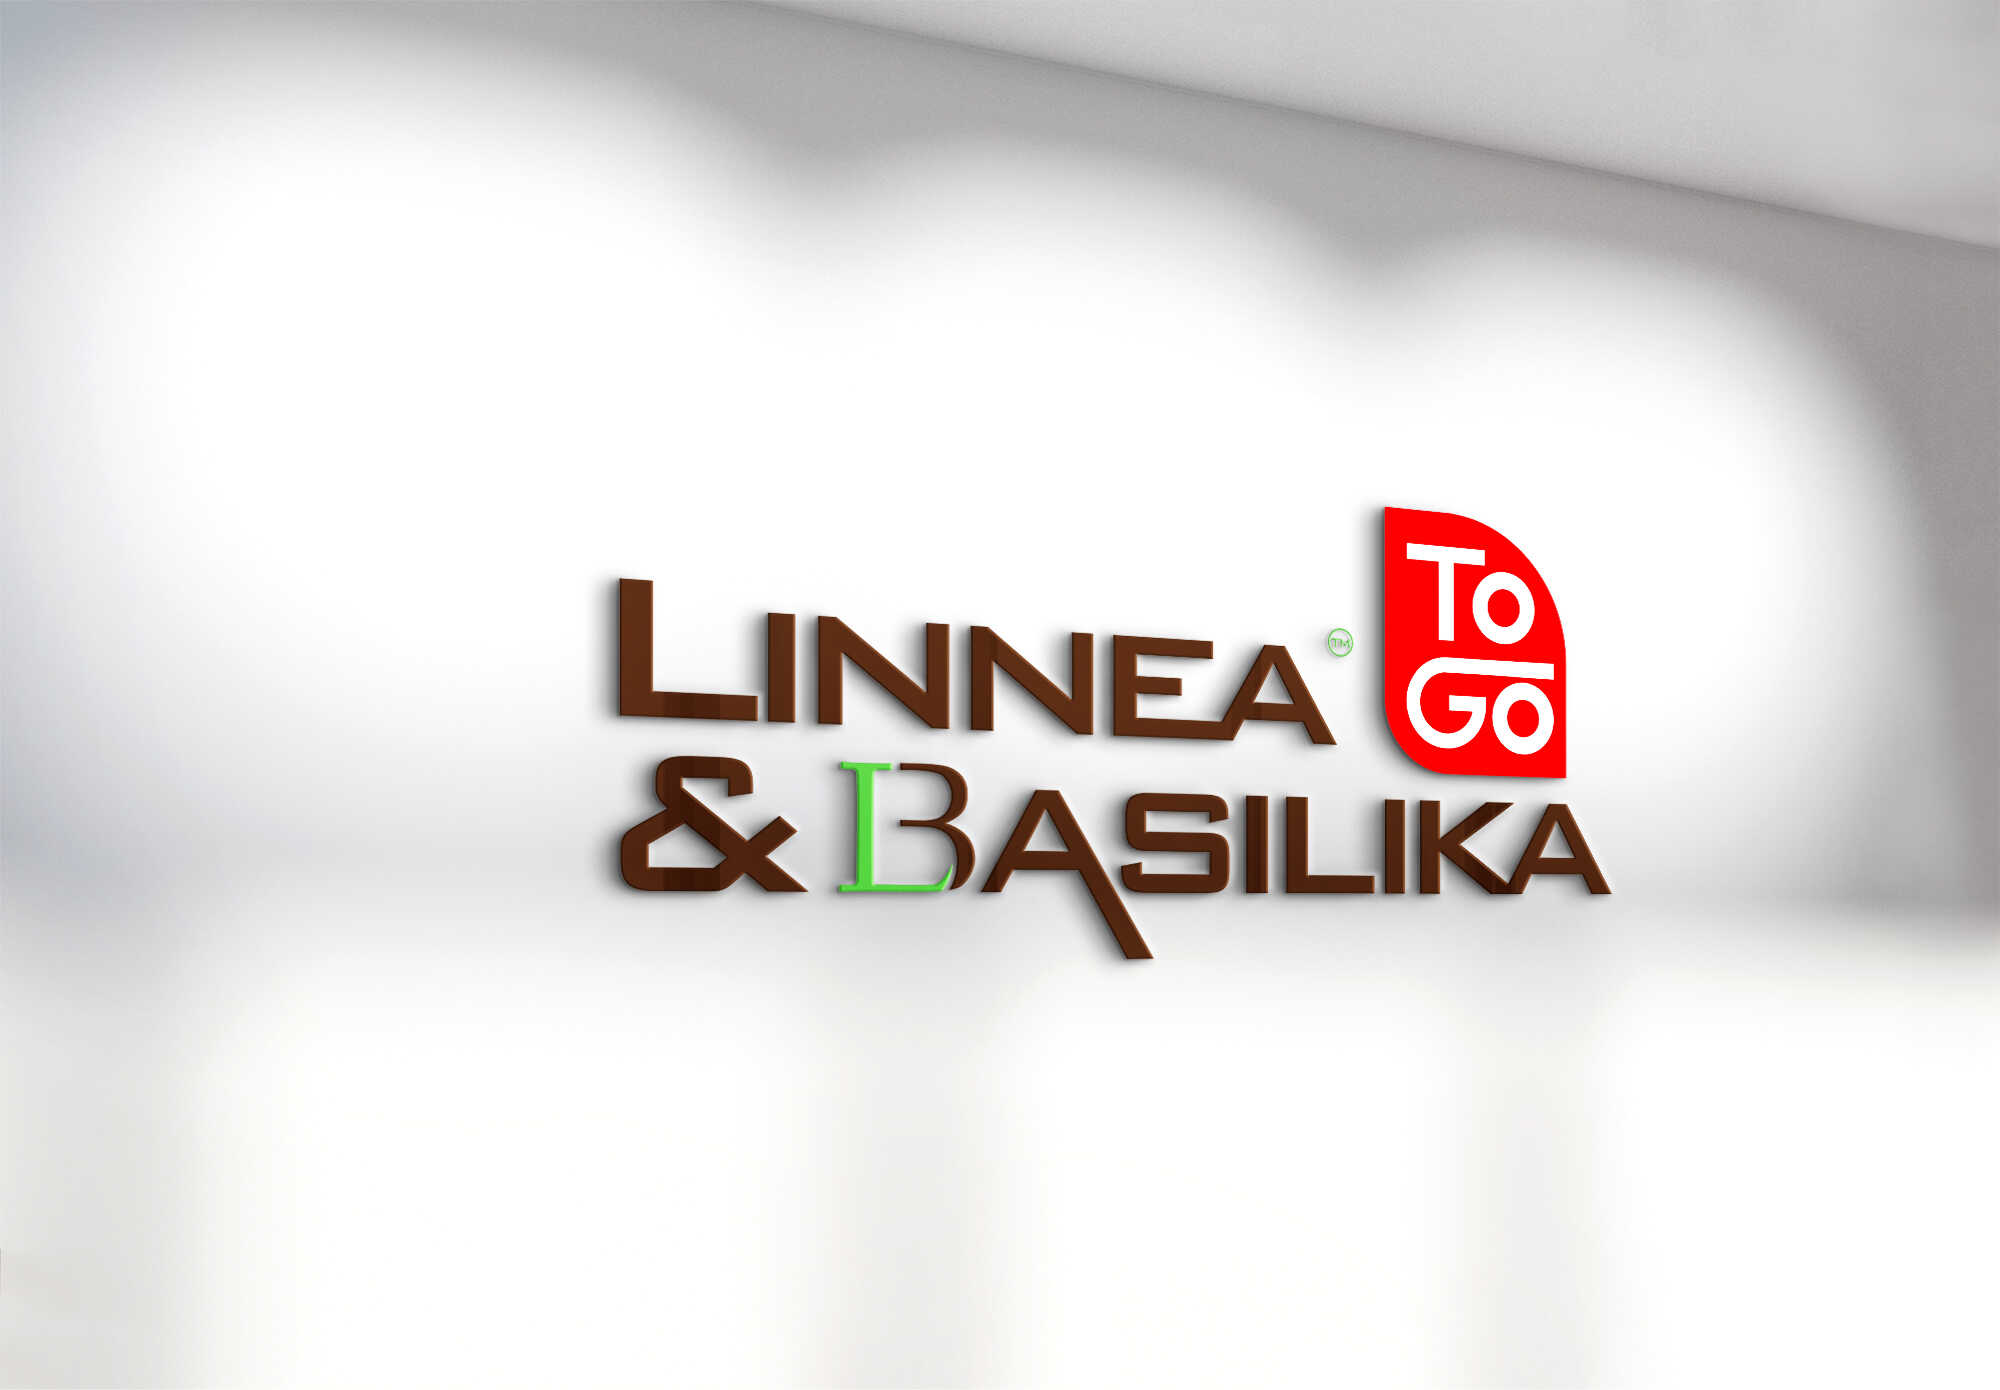 Linnea & Basilika To Go